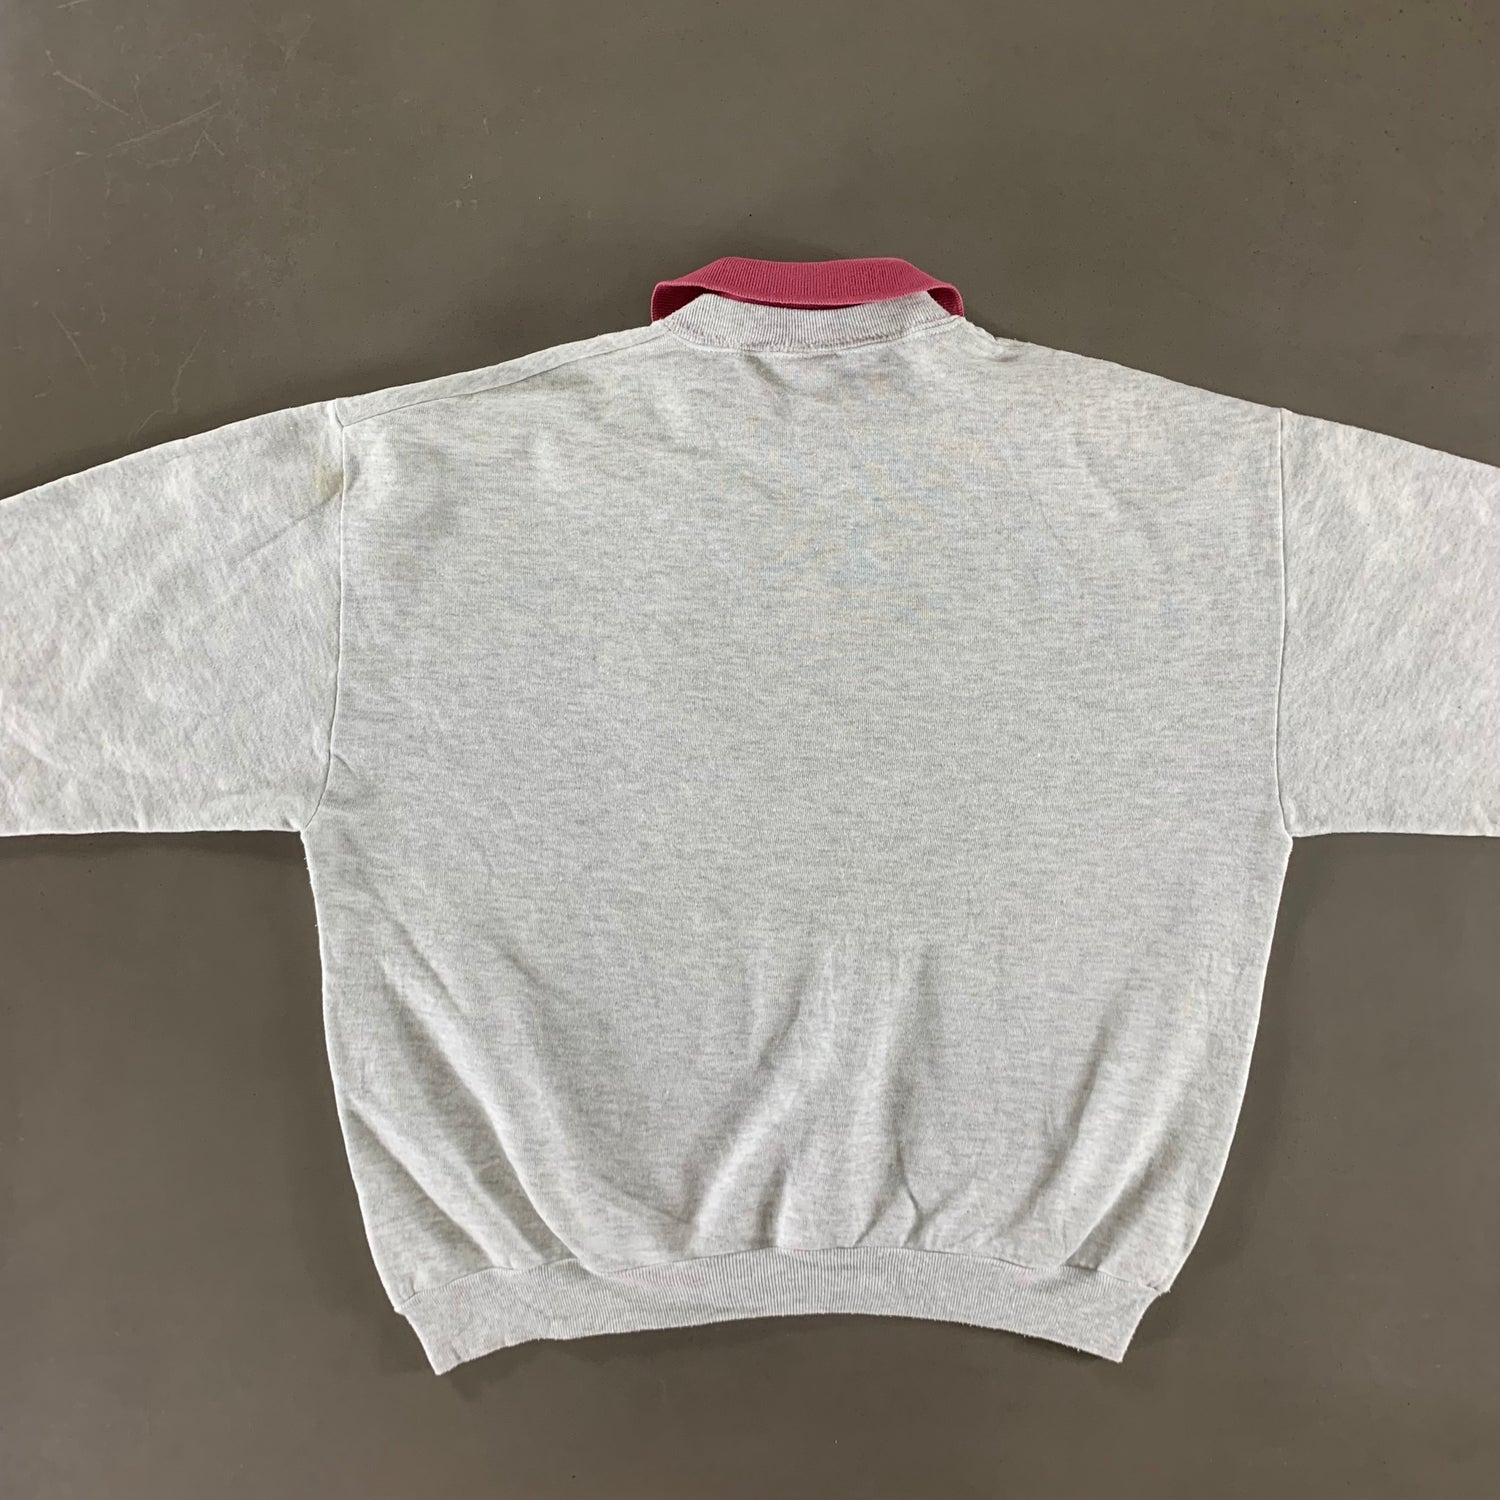 Vintage 1990s Collared Heart Sweatshirt size XL